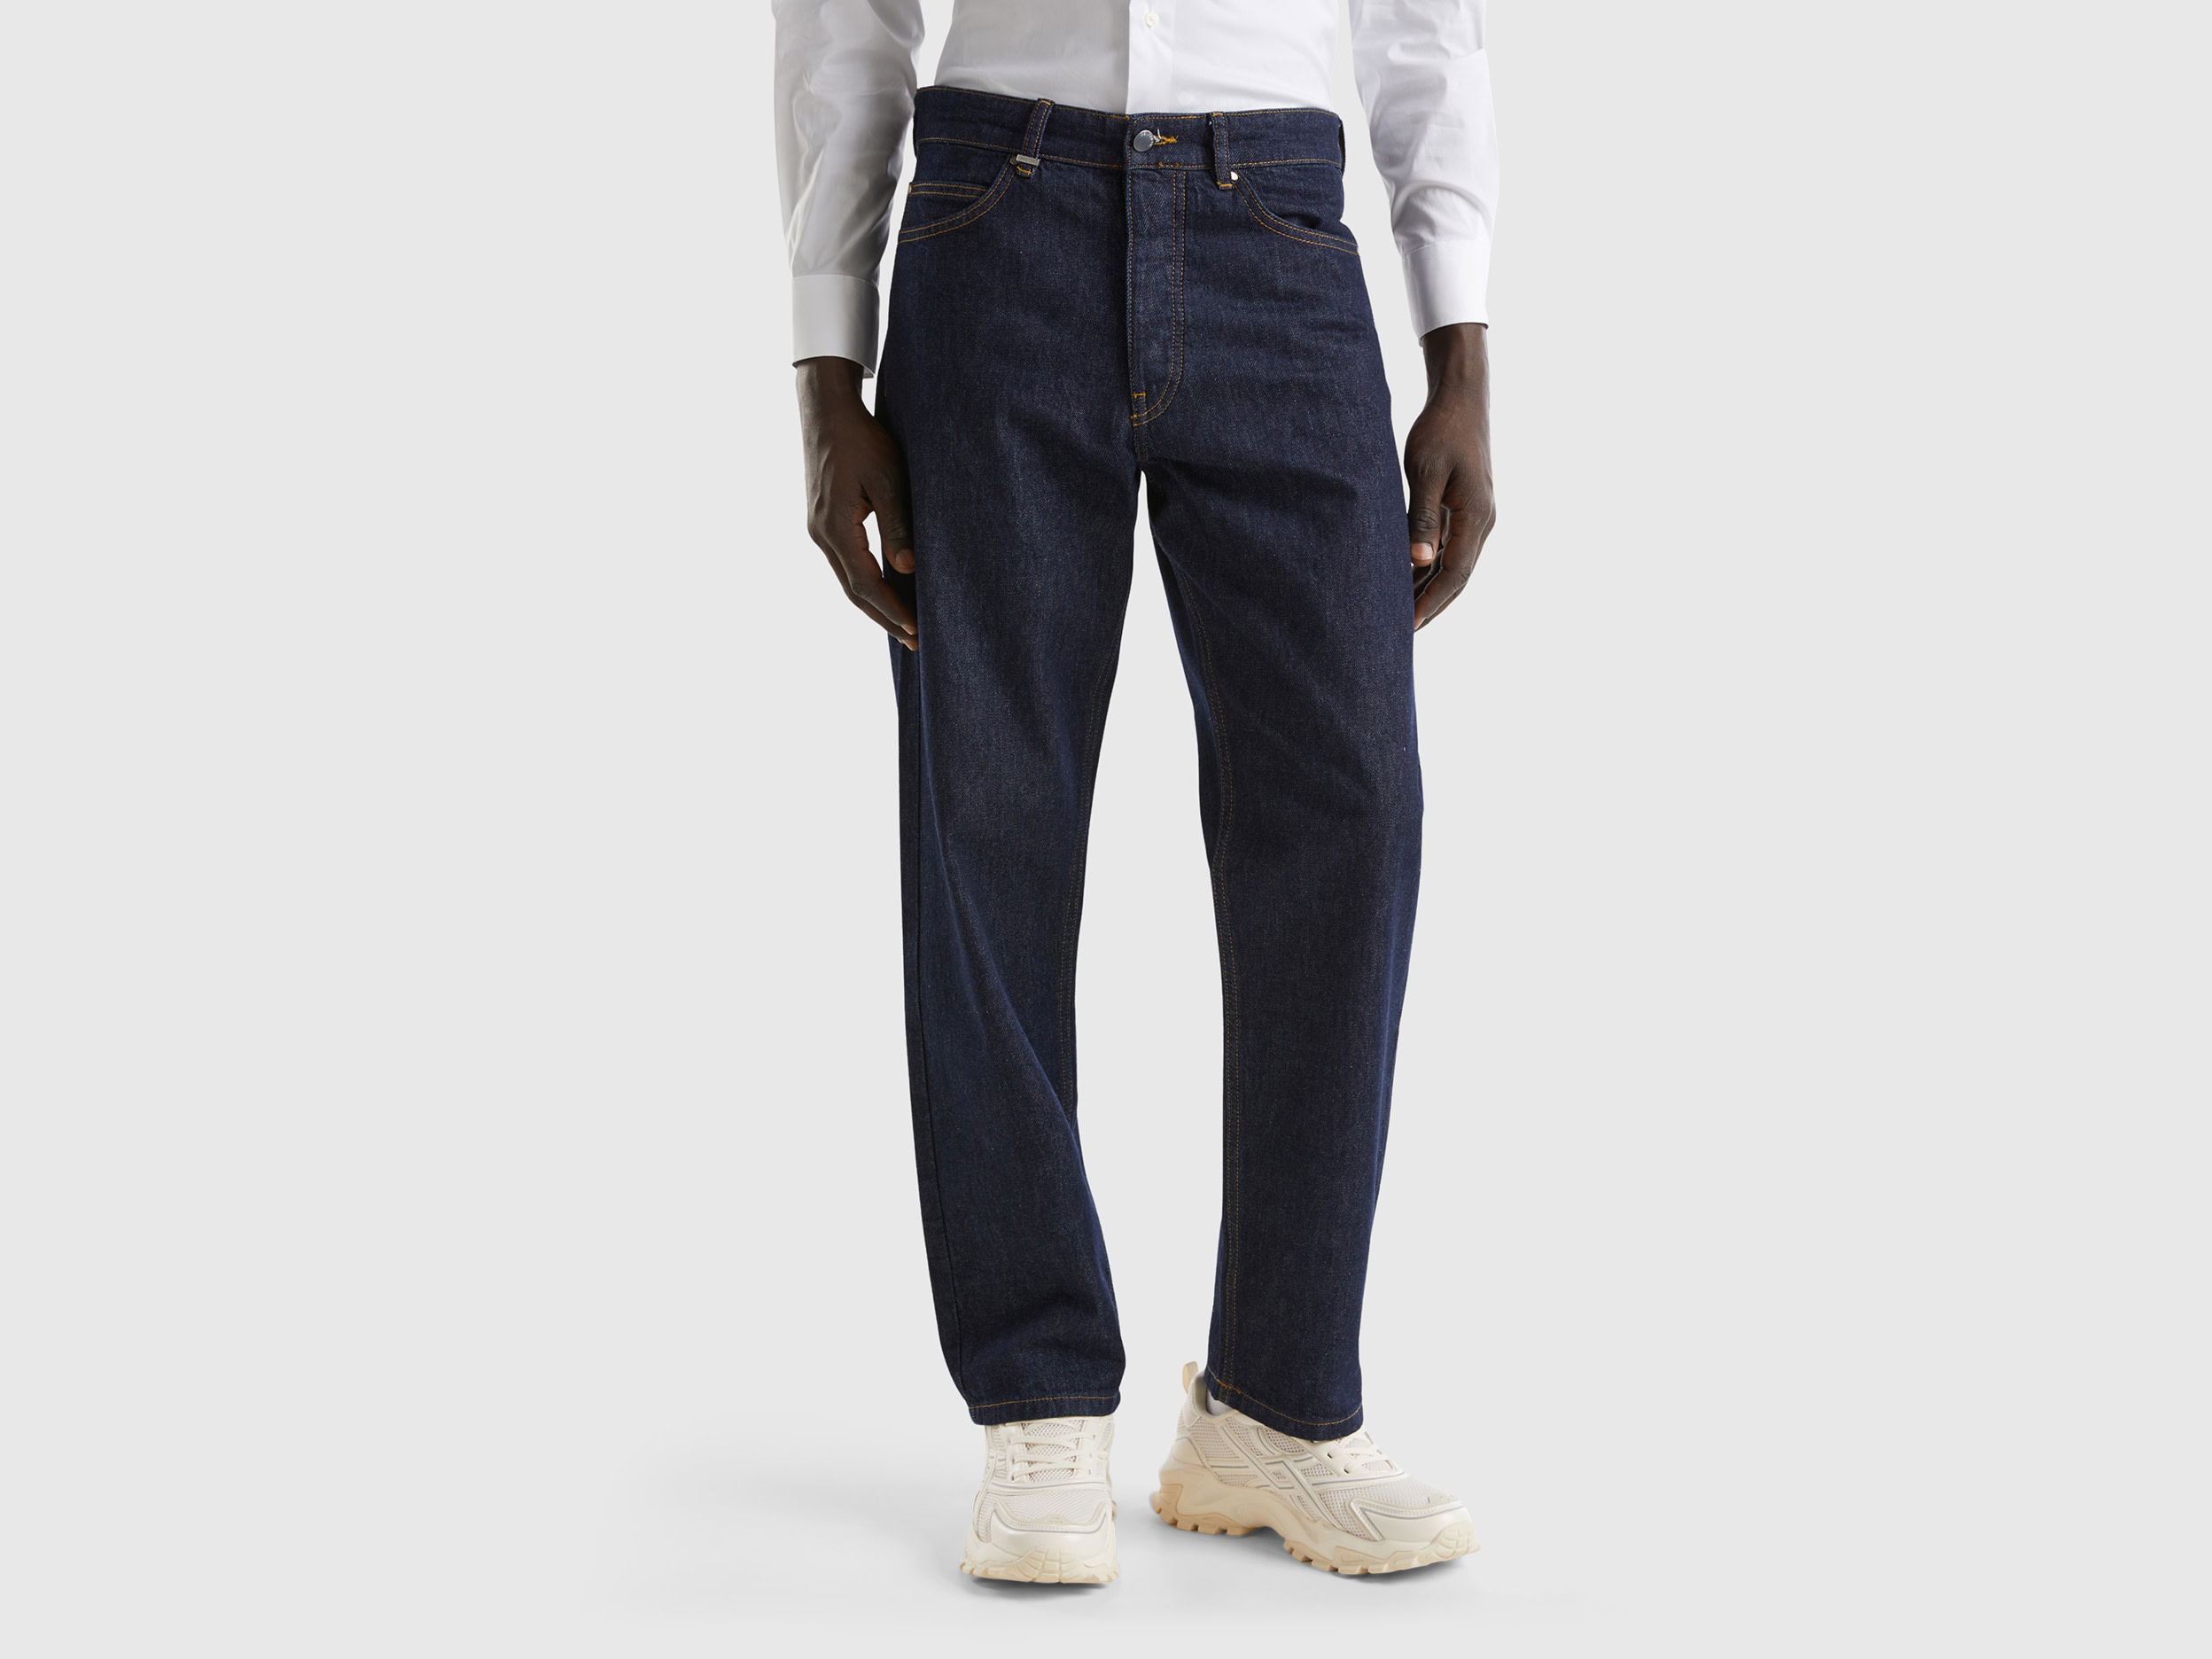 Benetton, Relaxed Fit Jeans, size 32, Dark Blue, Men